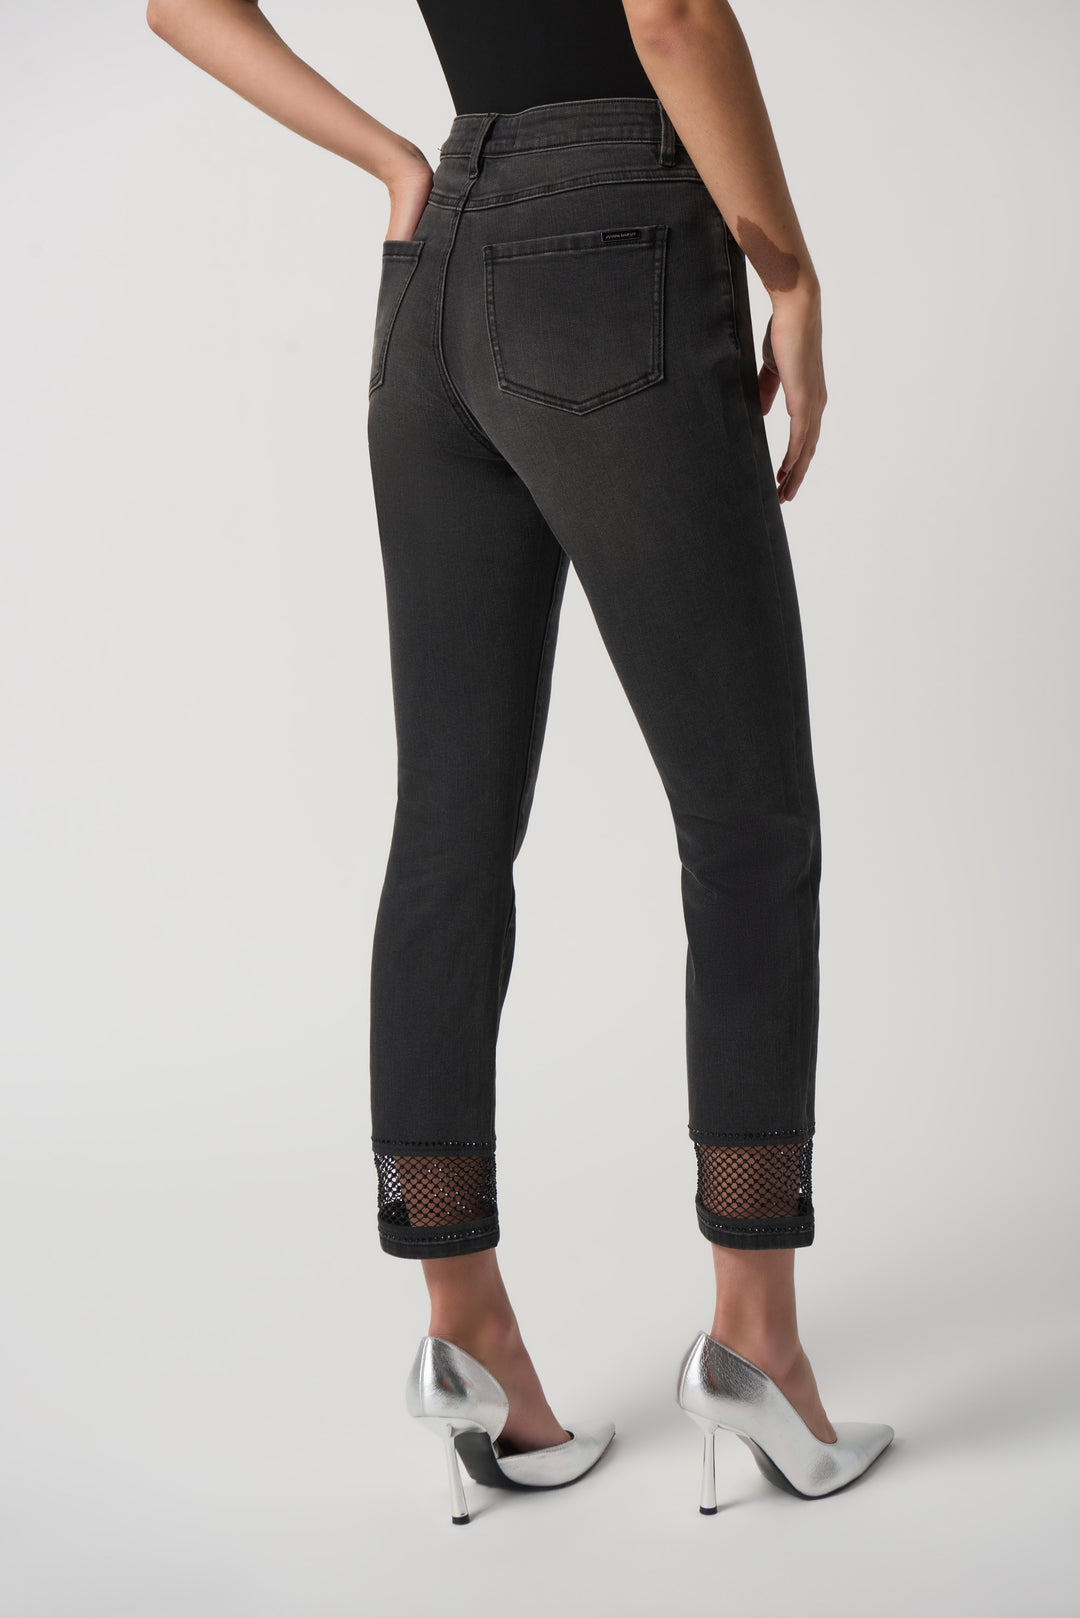 Joseph Ribkoff Fall 2023 women's casual slim cropped denim grey jeans - back